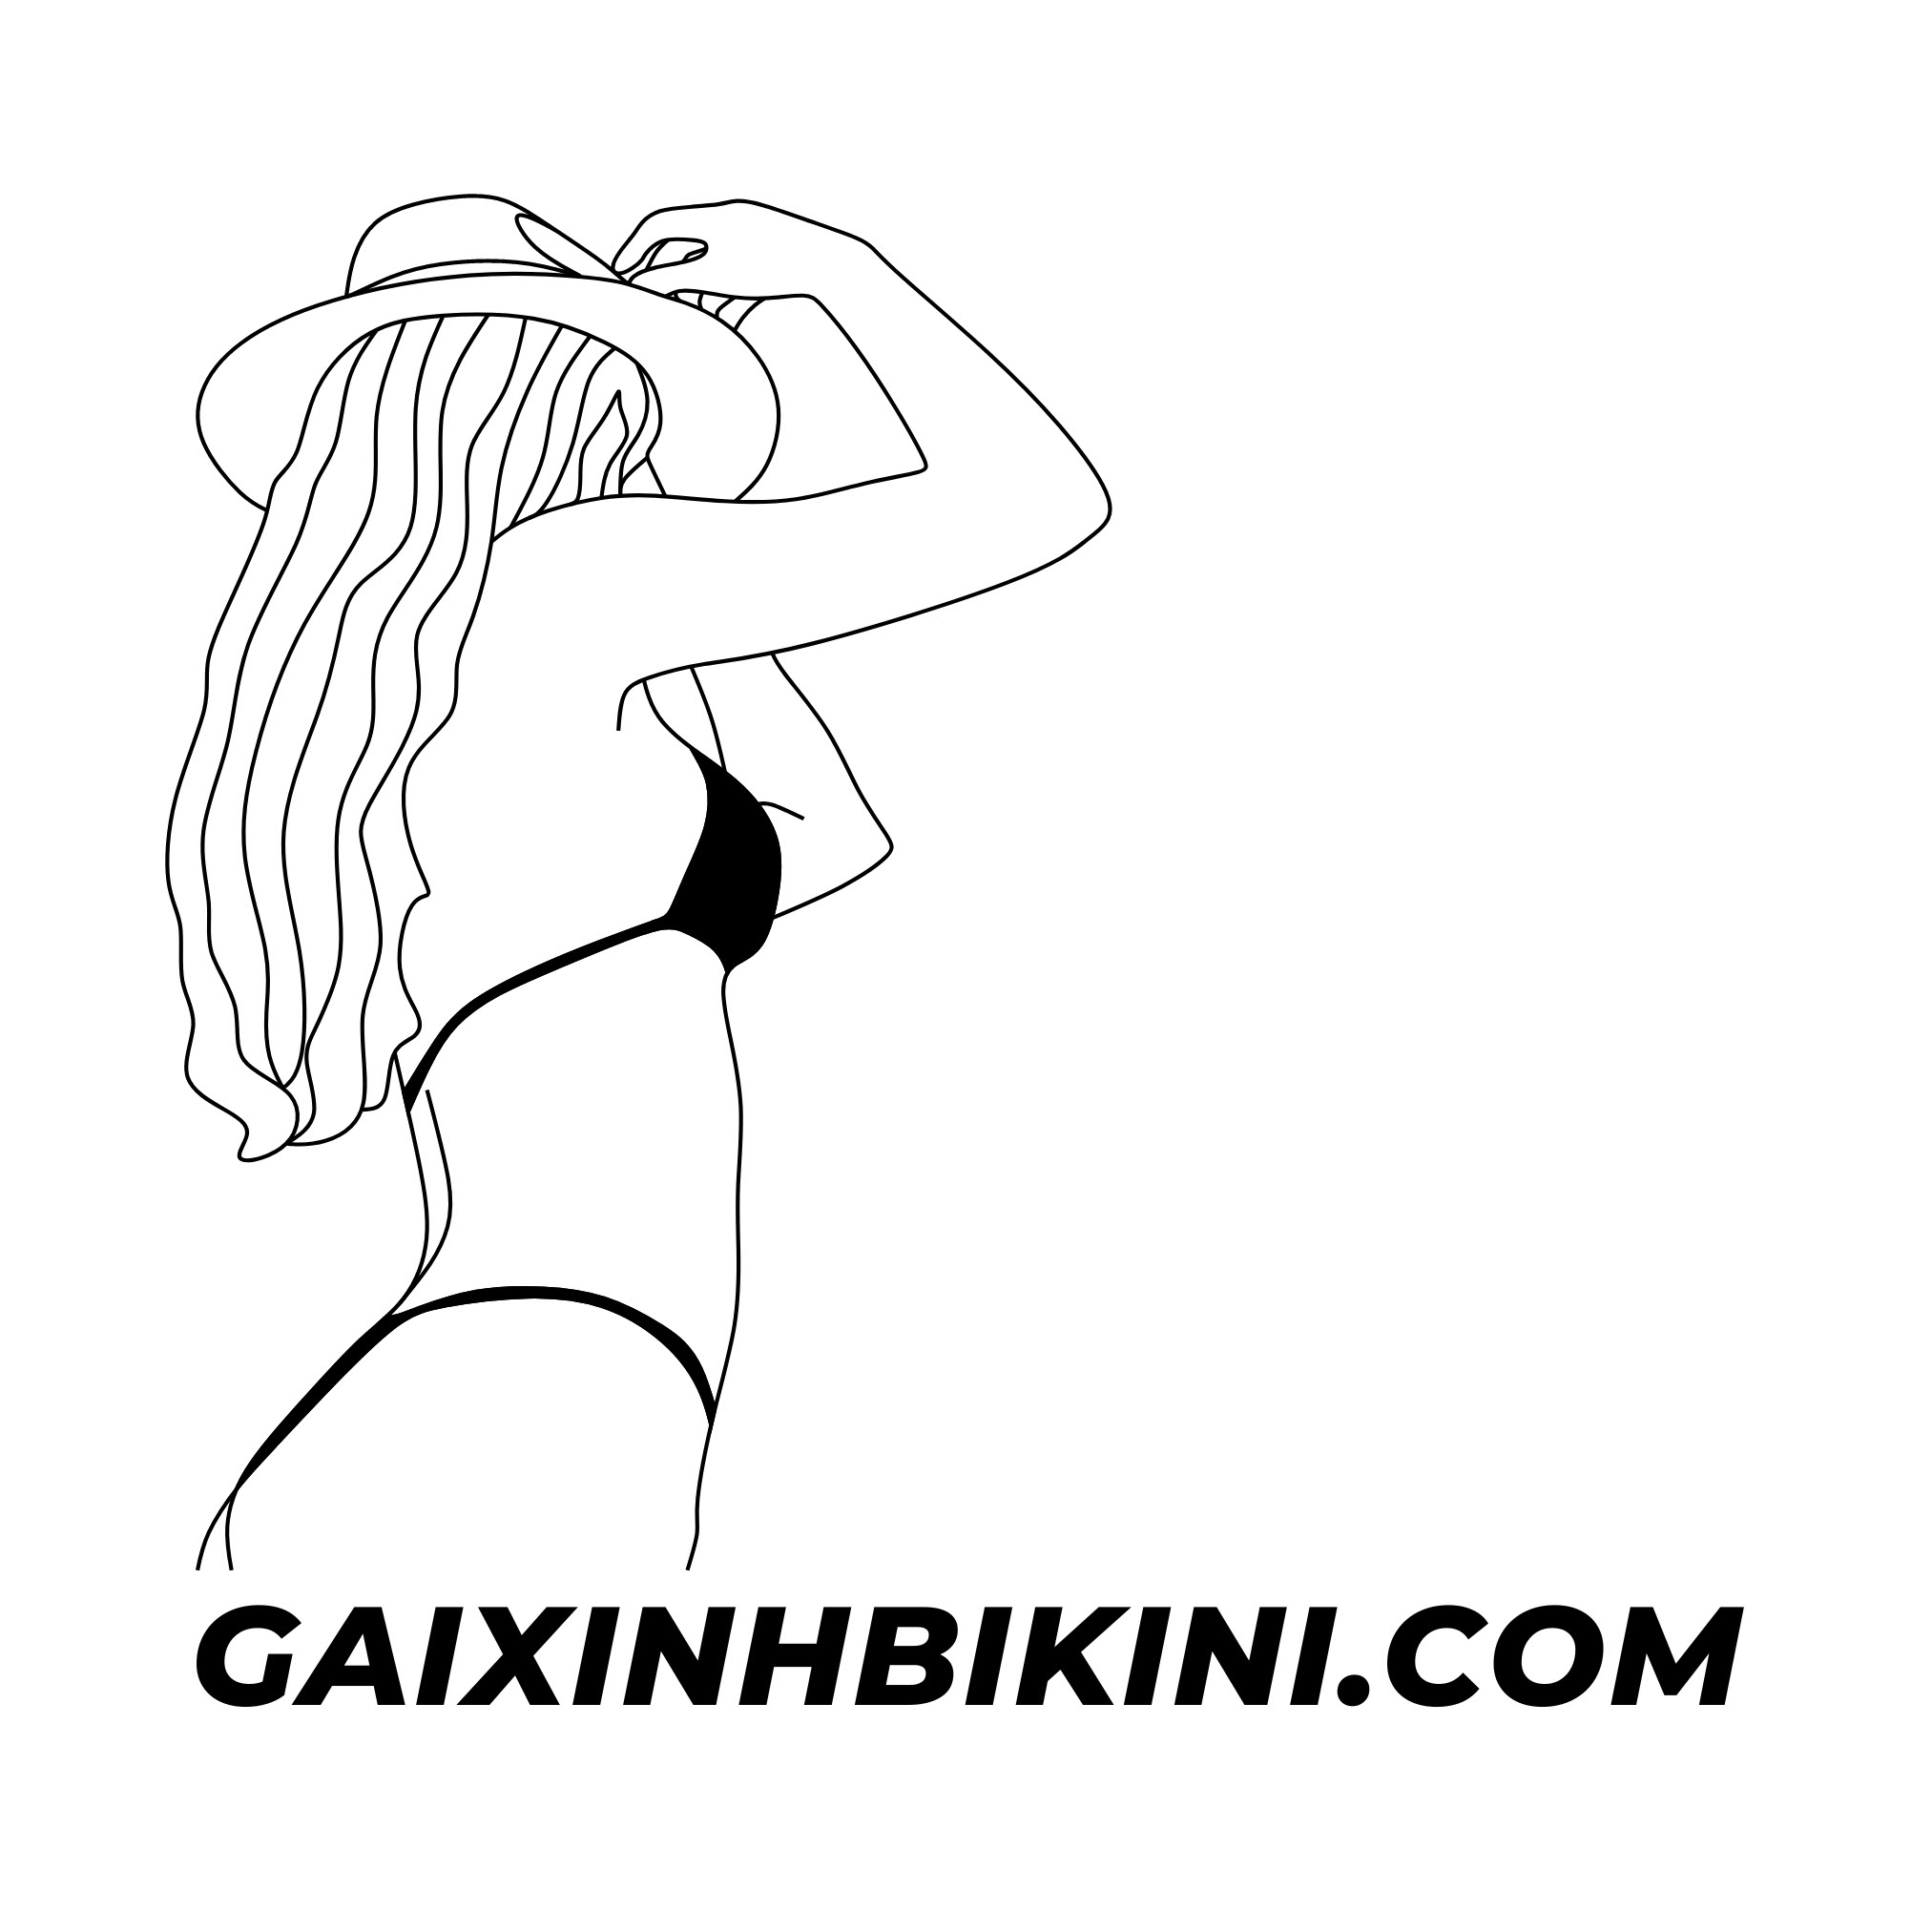 Logo gaixinhbikini.com